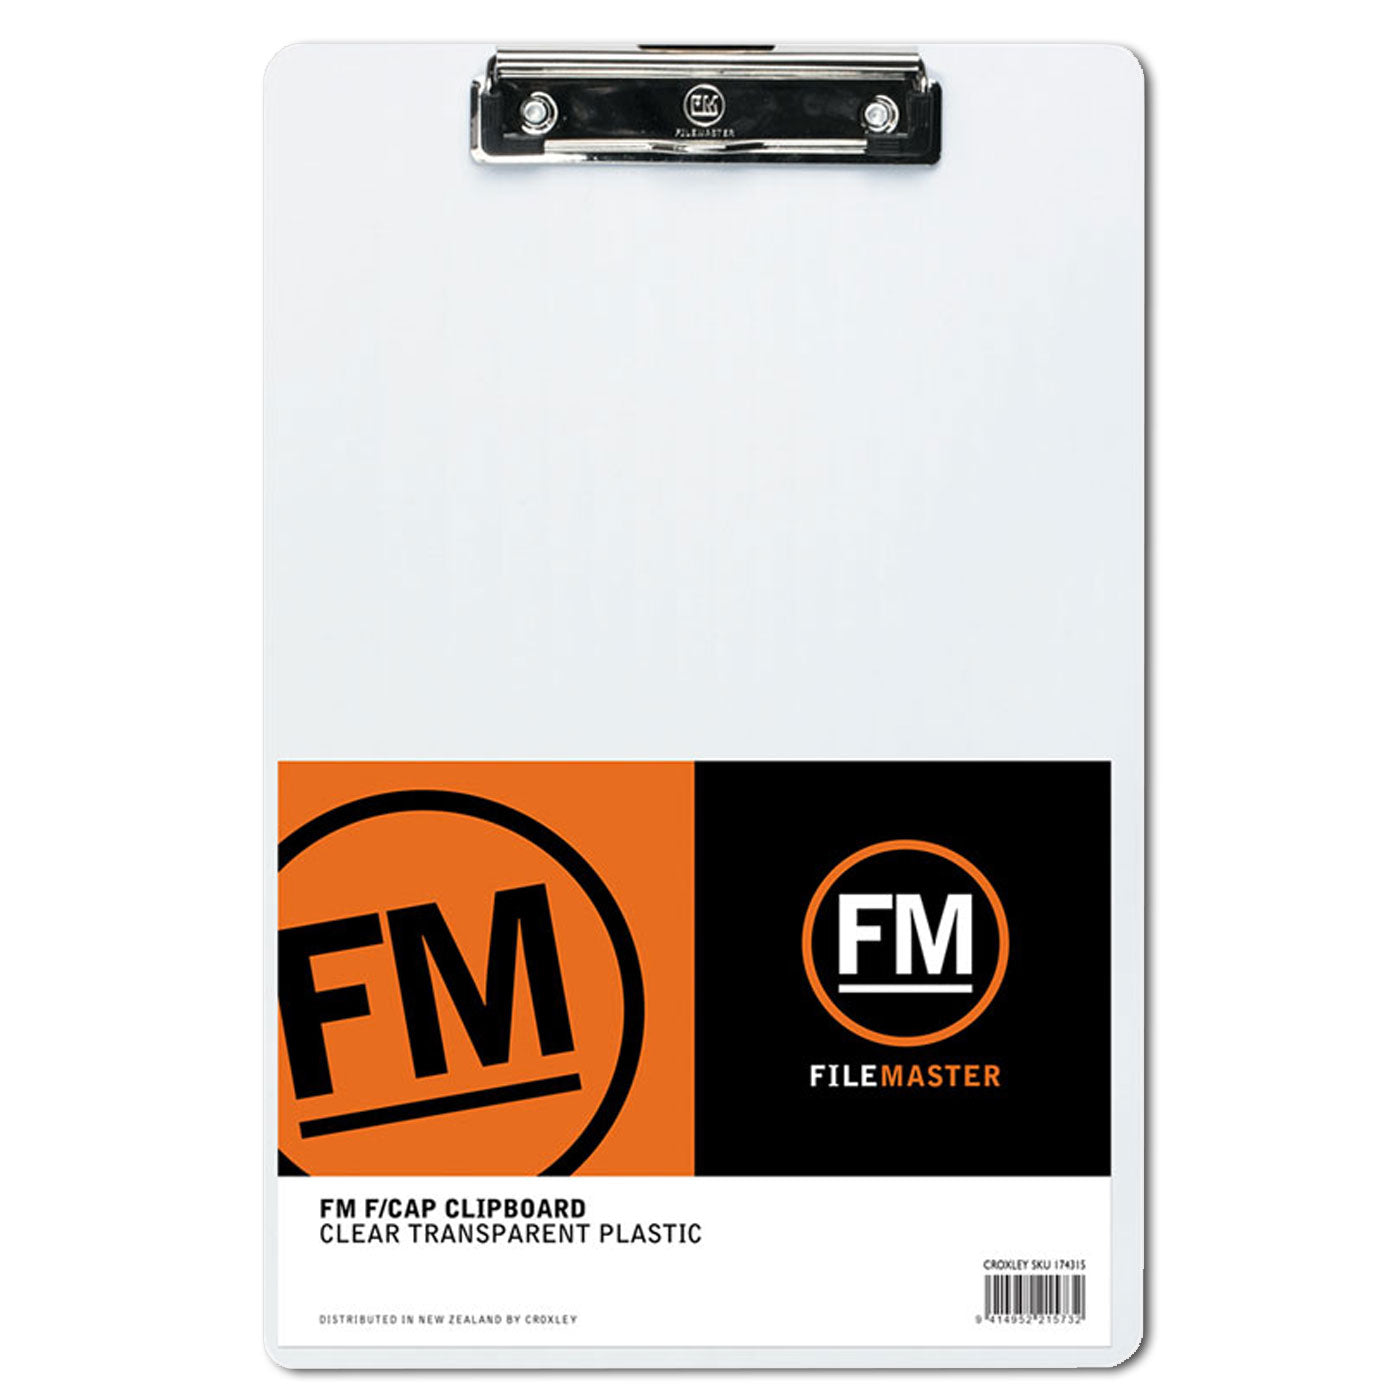 FM Clipboard Clear Transparent Plastic Foolscap